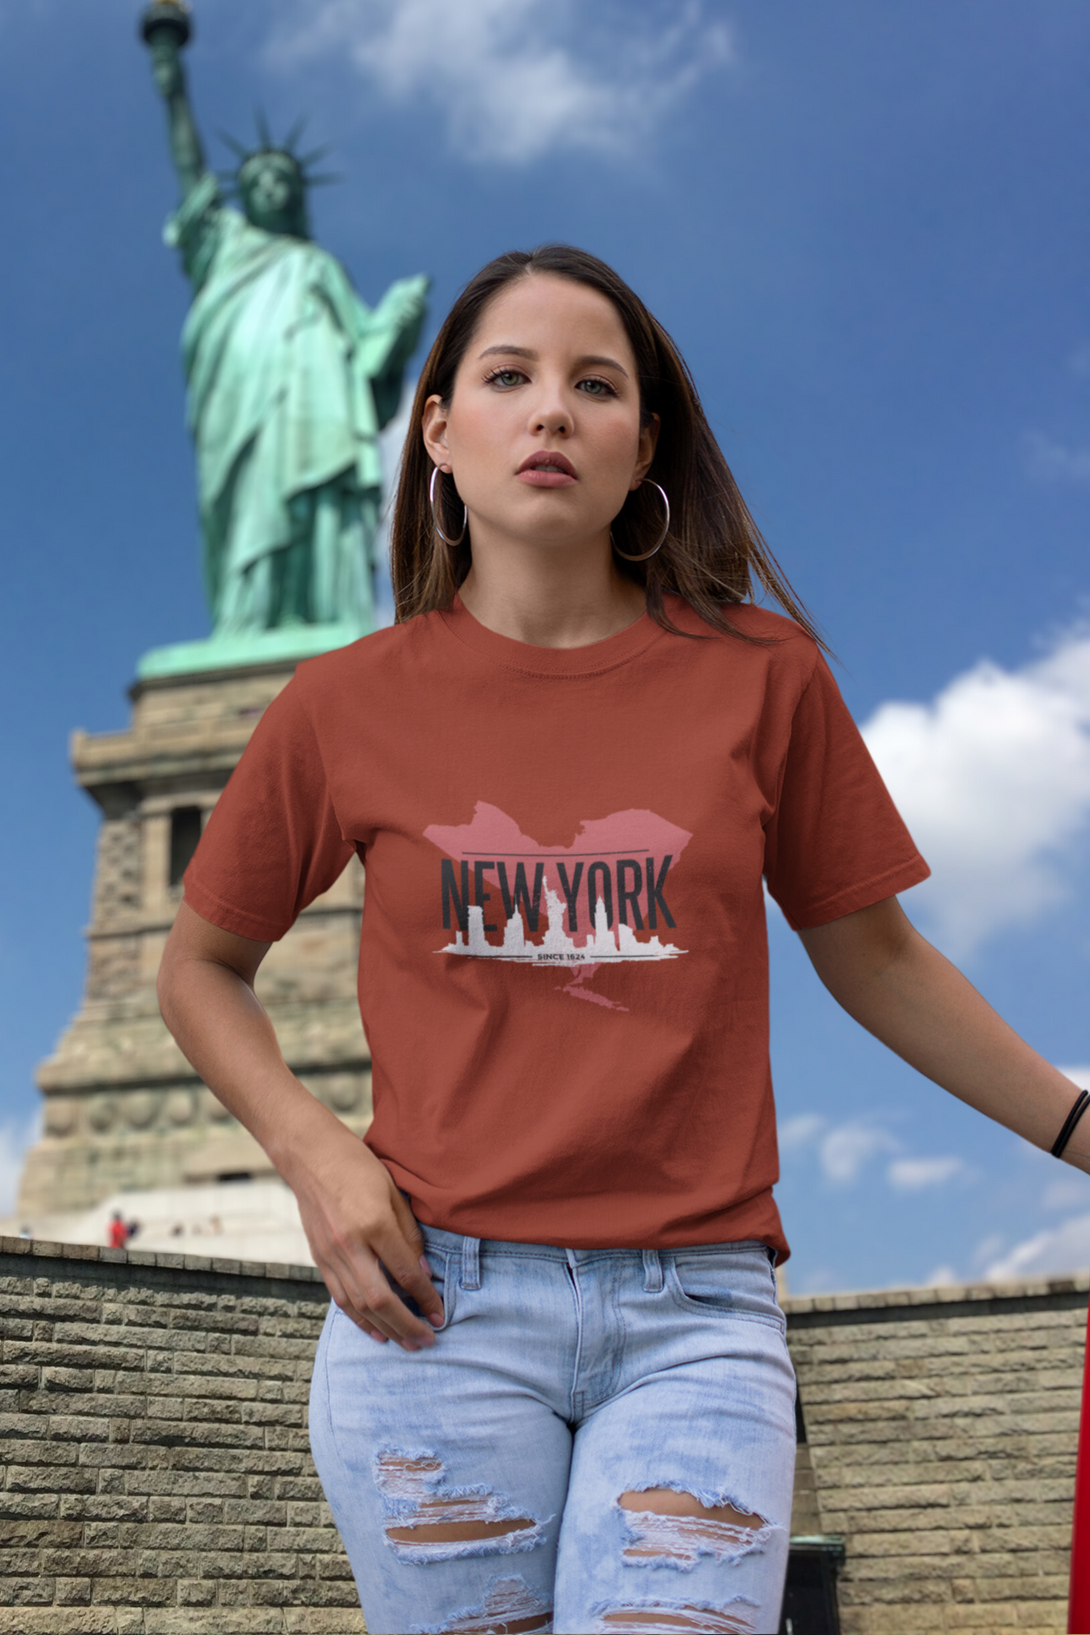 Nyc Skyline Printed T-Shirt For Women - WowWaves - 5